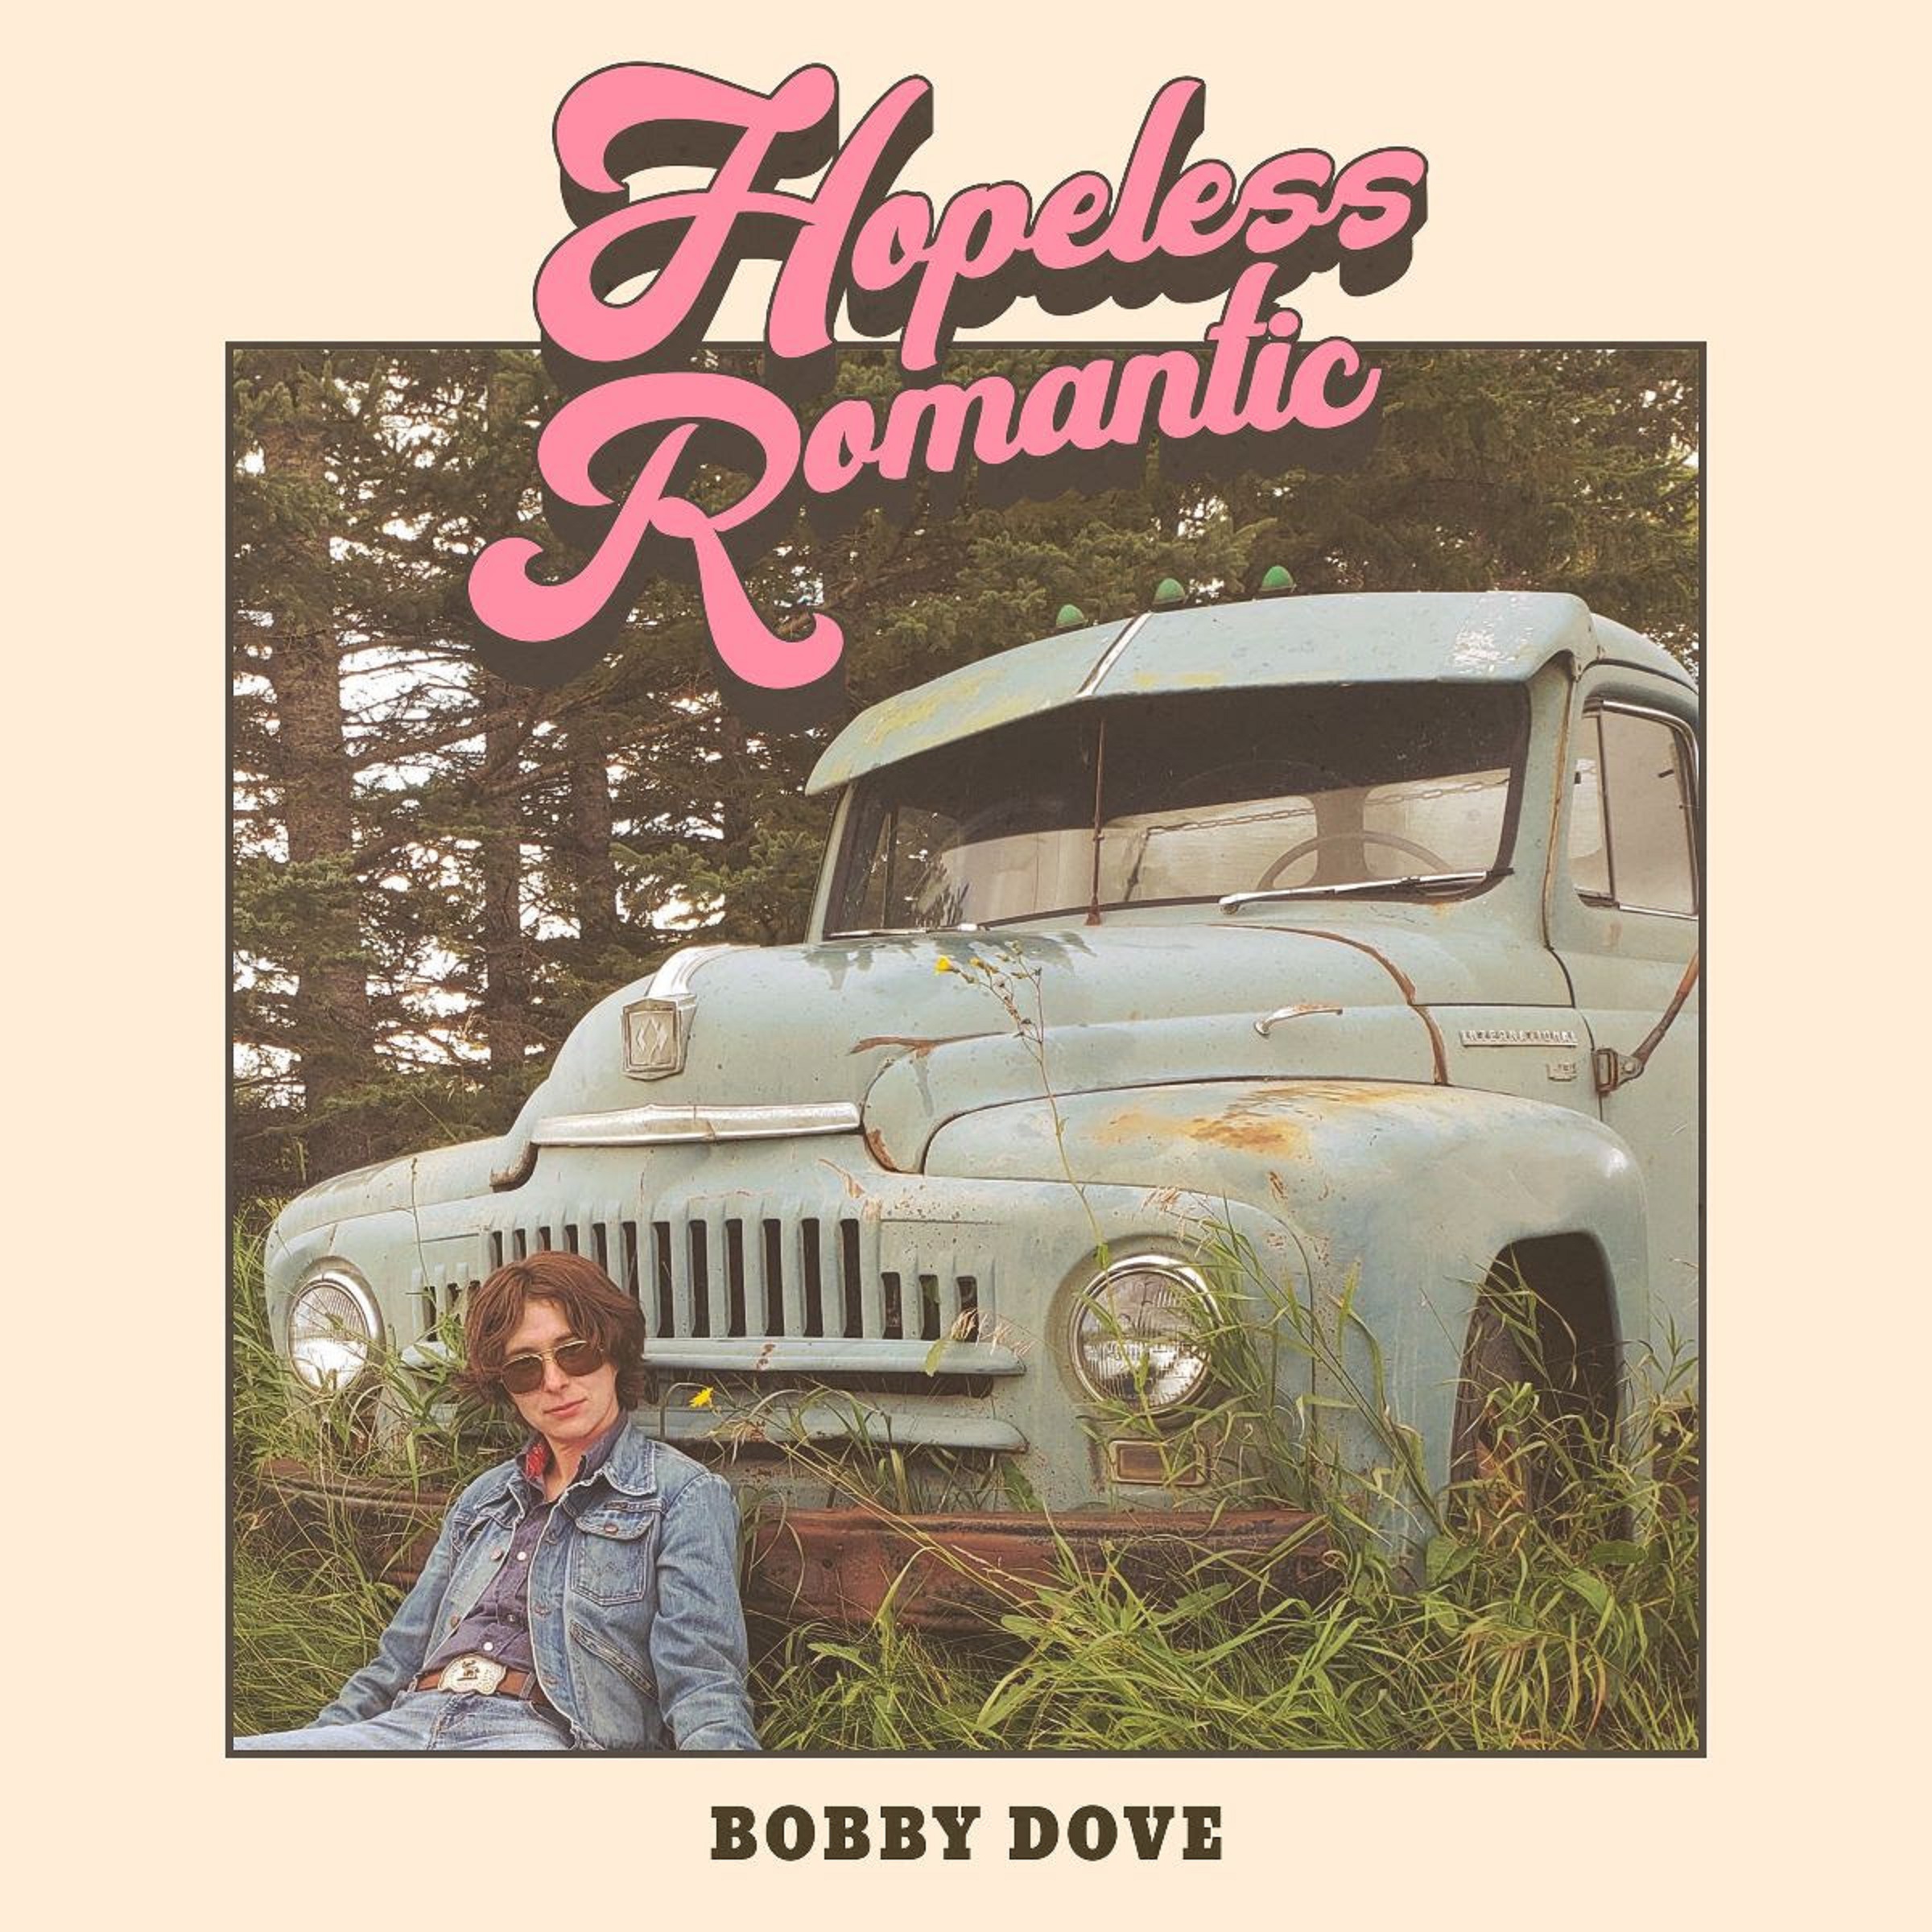 Bobby Dove releases new album, "Hopeless Romantic"